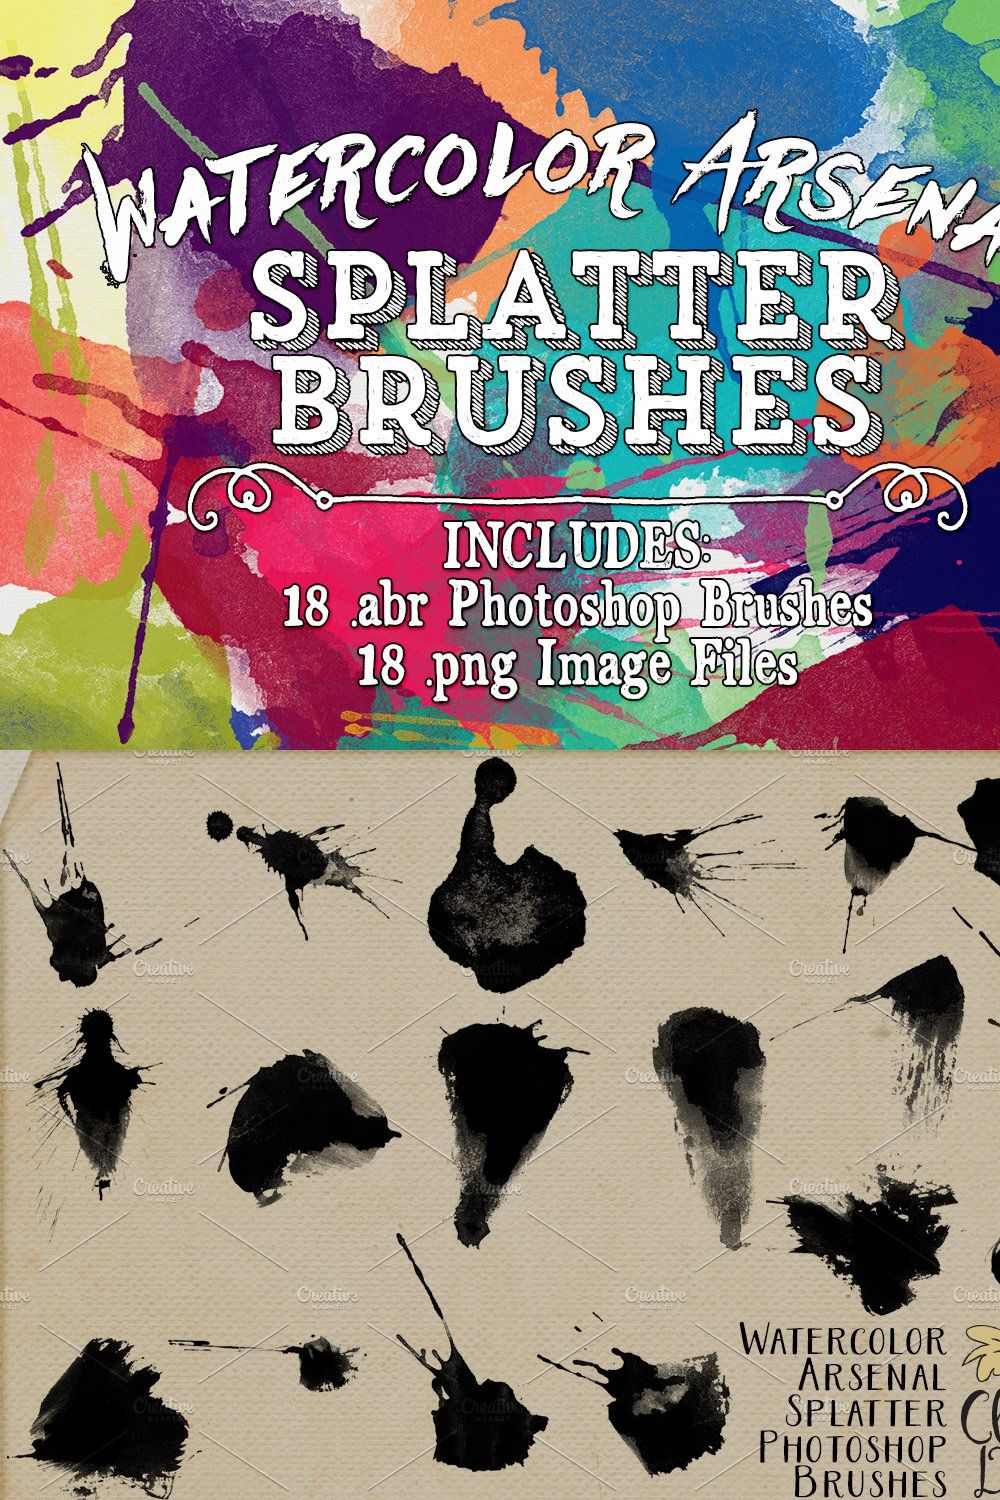 Watercolor Arsenal Splatter Brushes pinterest preview image.